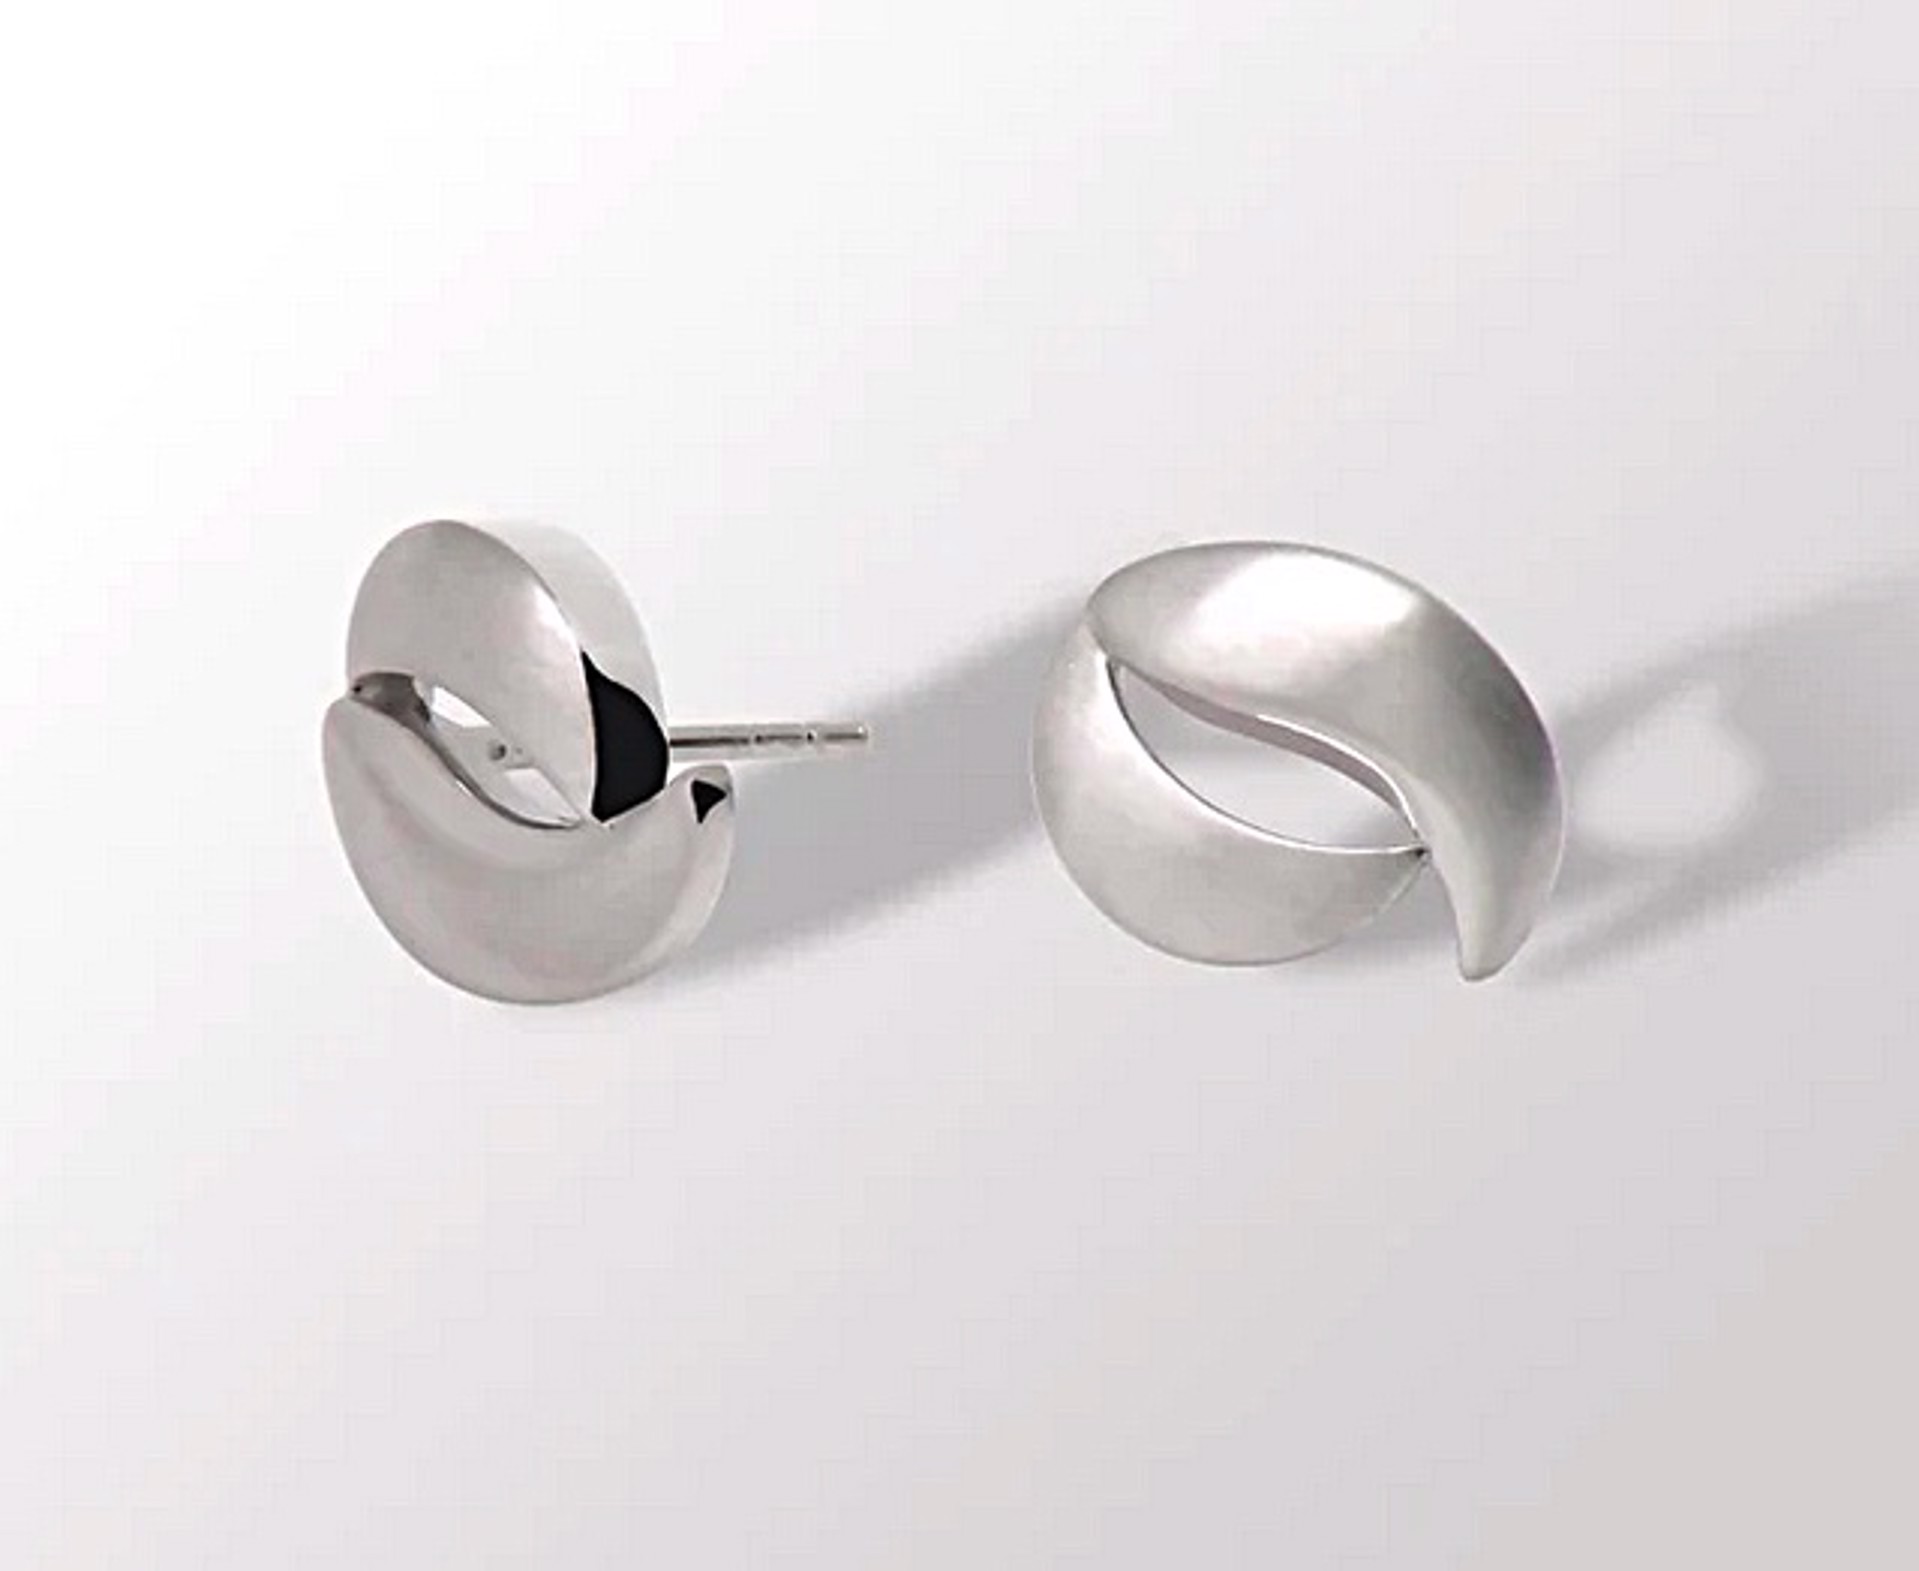 Earrings - Sterling Silver Modern Earrings Collection E5635 by Joryel Vera